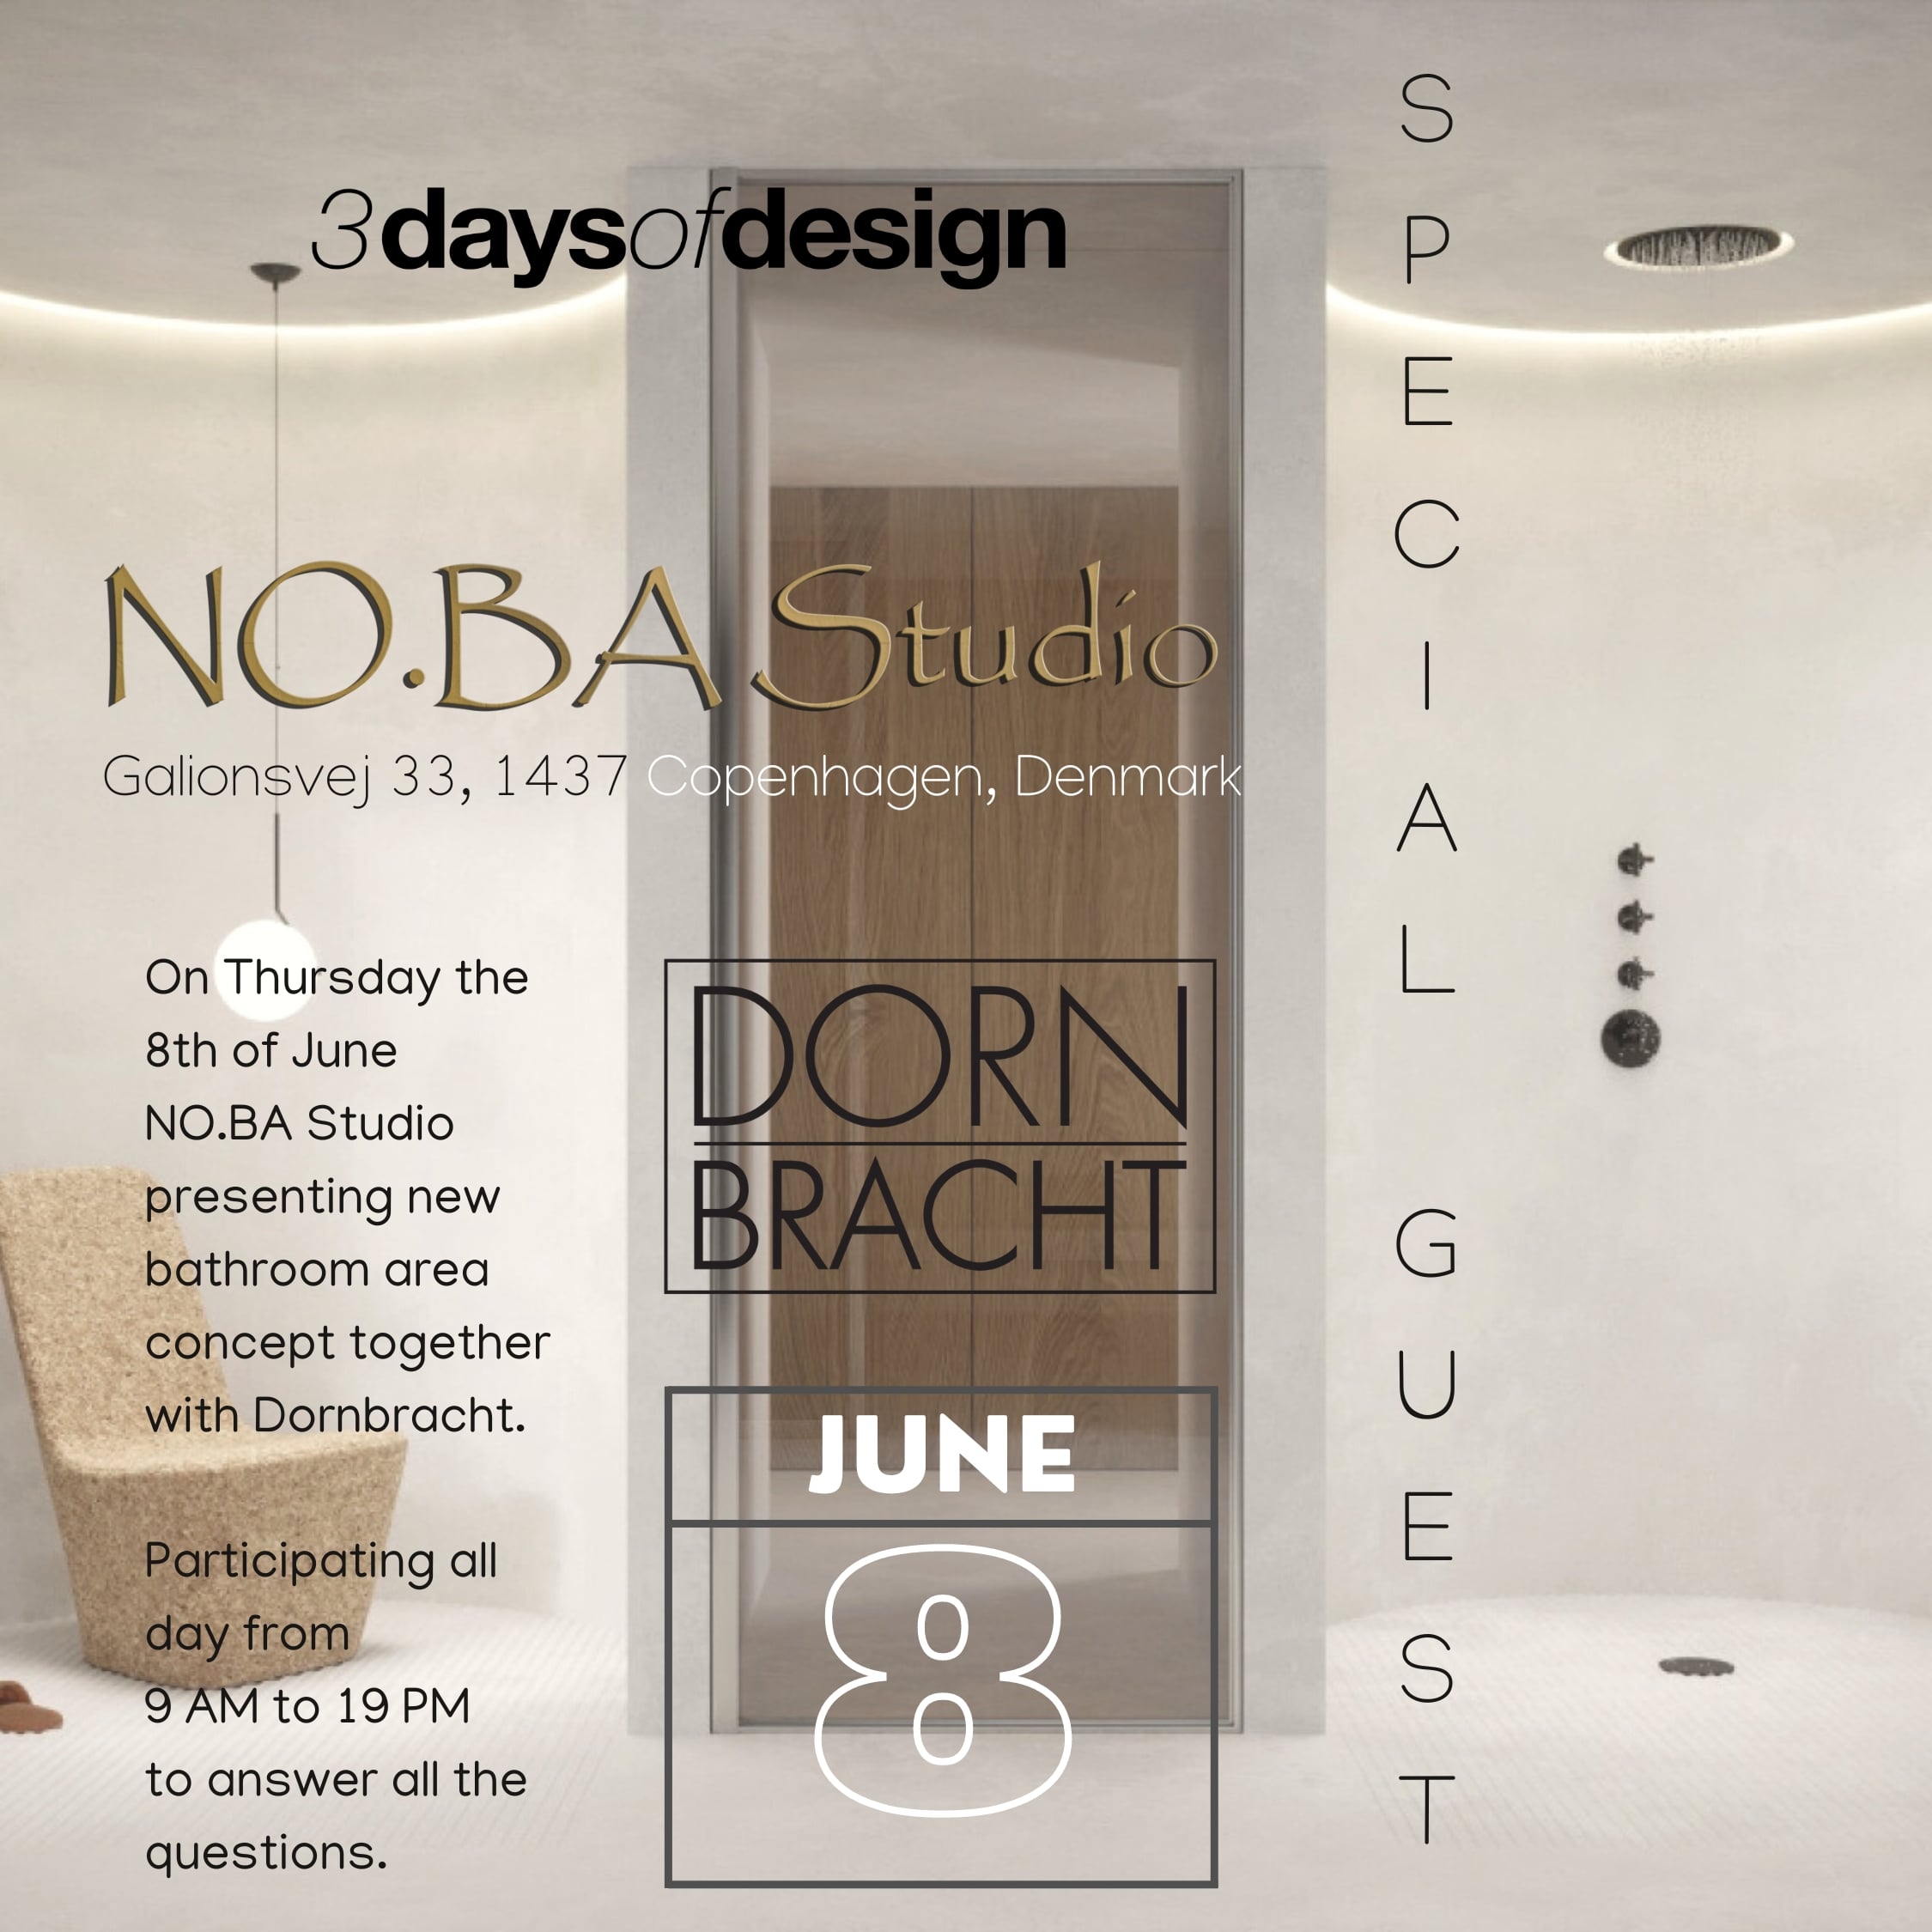 NO.BA Studio at 3 Days of Design